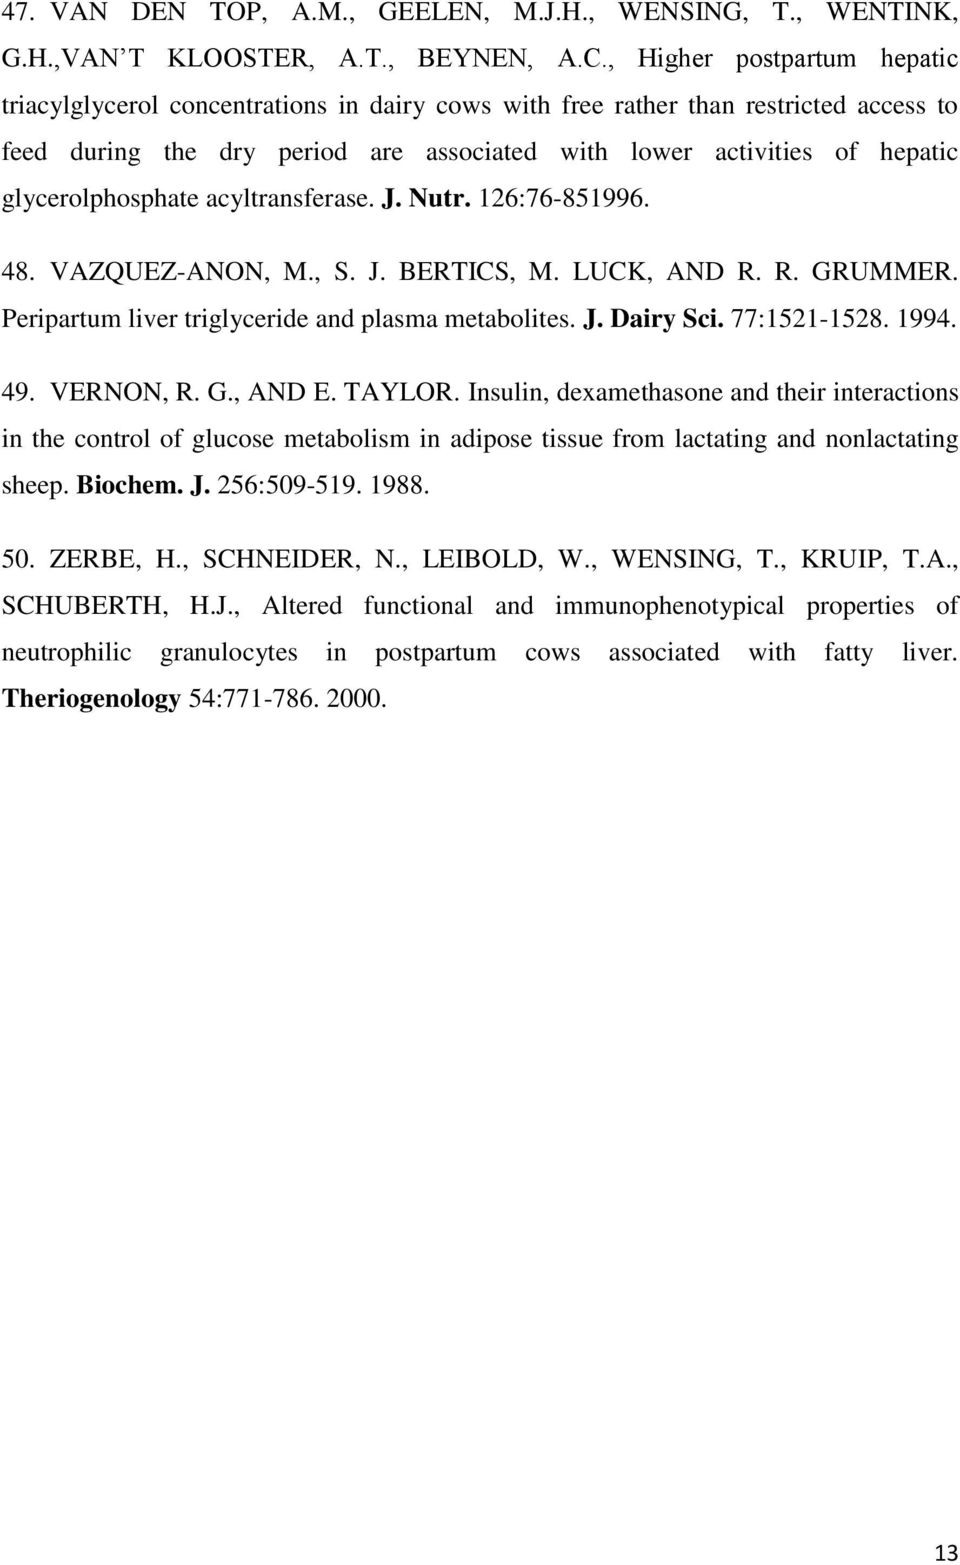 glycerolphosphate acyltransferase. J. Nutr. 126:76-851996. 48. VAZQUEZ-ANON, M., S. J. BERTICS, M. LUCK, AND R. R. GRUMMER. Peripartum liver triglyceride and plasma metabolites. J. Dairy Sci.